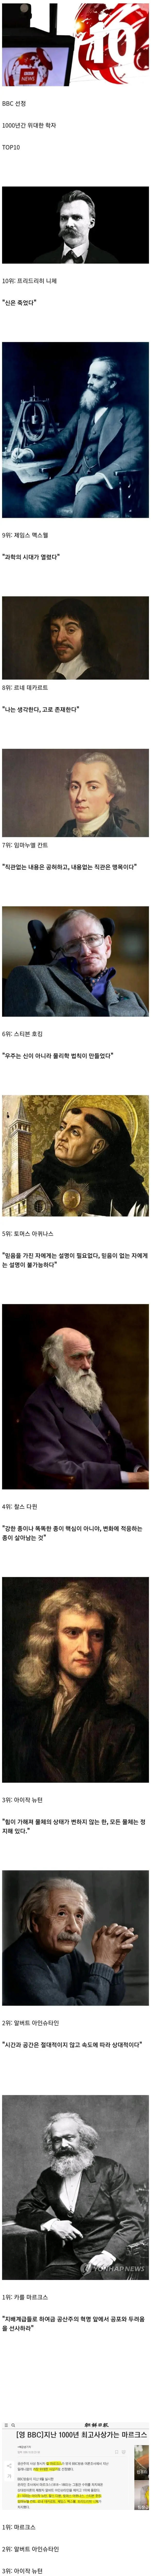 BBC 선정 인류 역사상 가장 위대한 학자 TOP | mbong.kr 엠봉